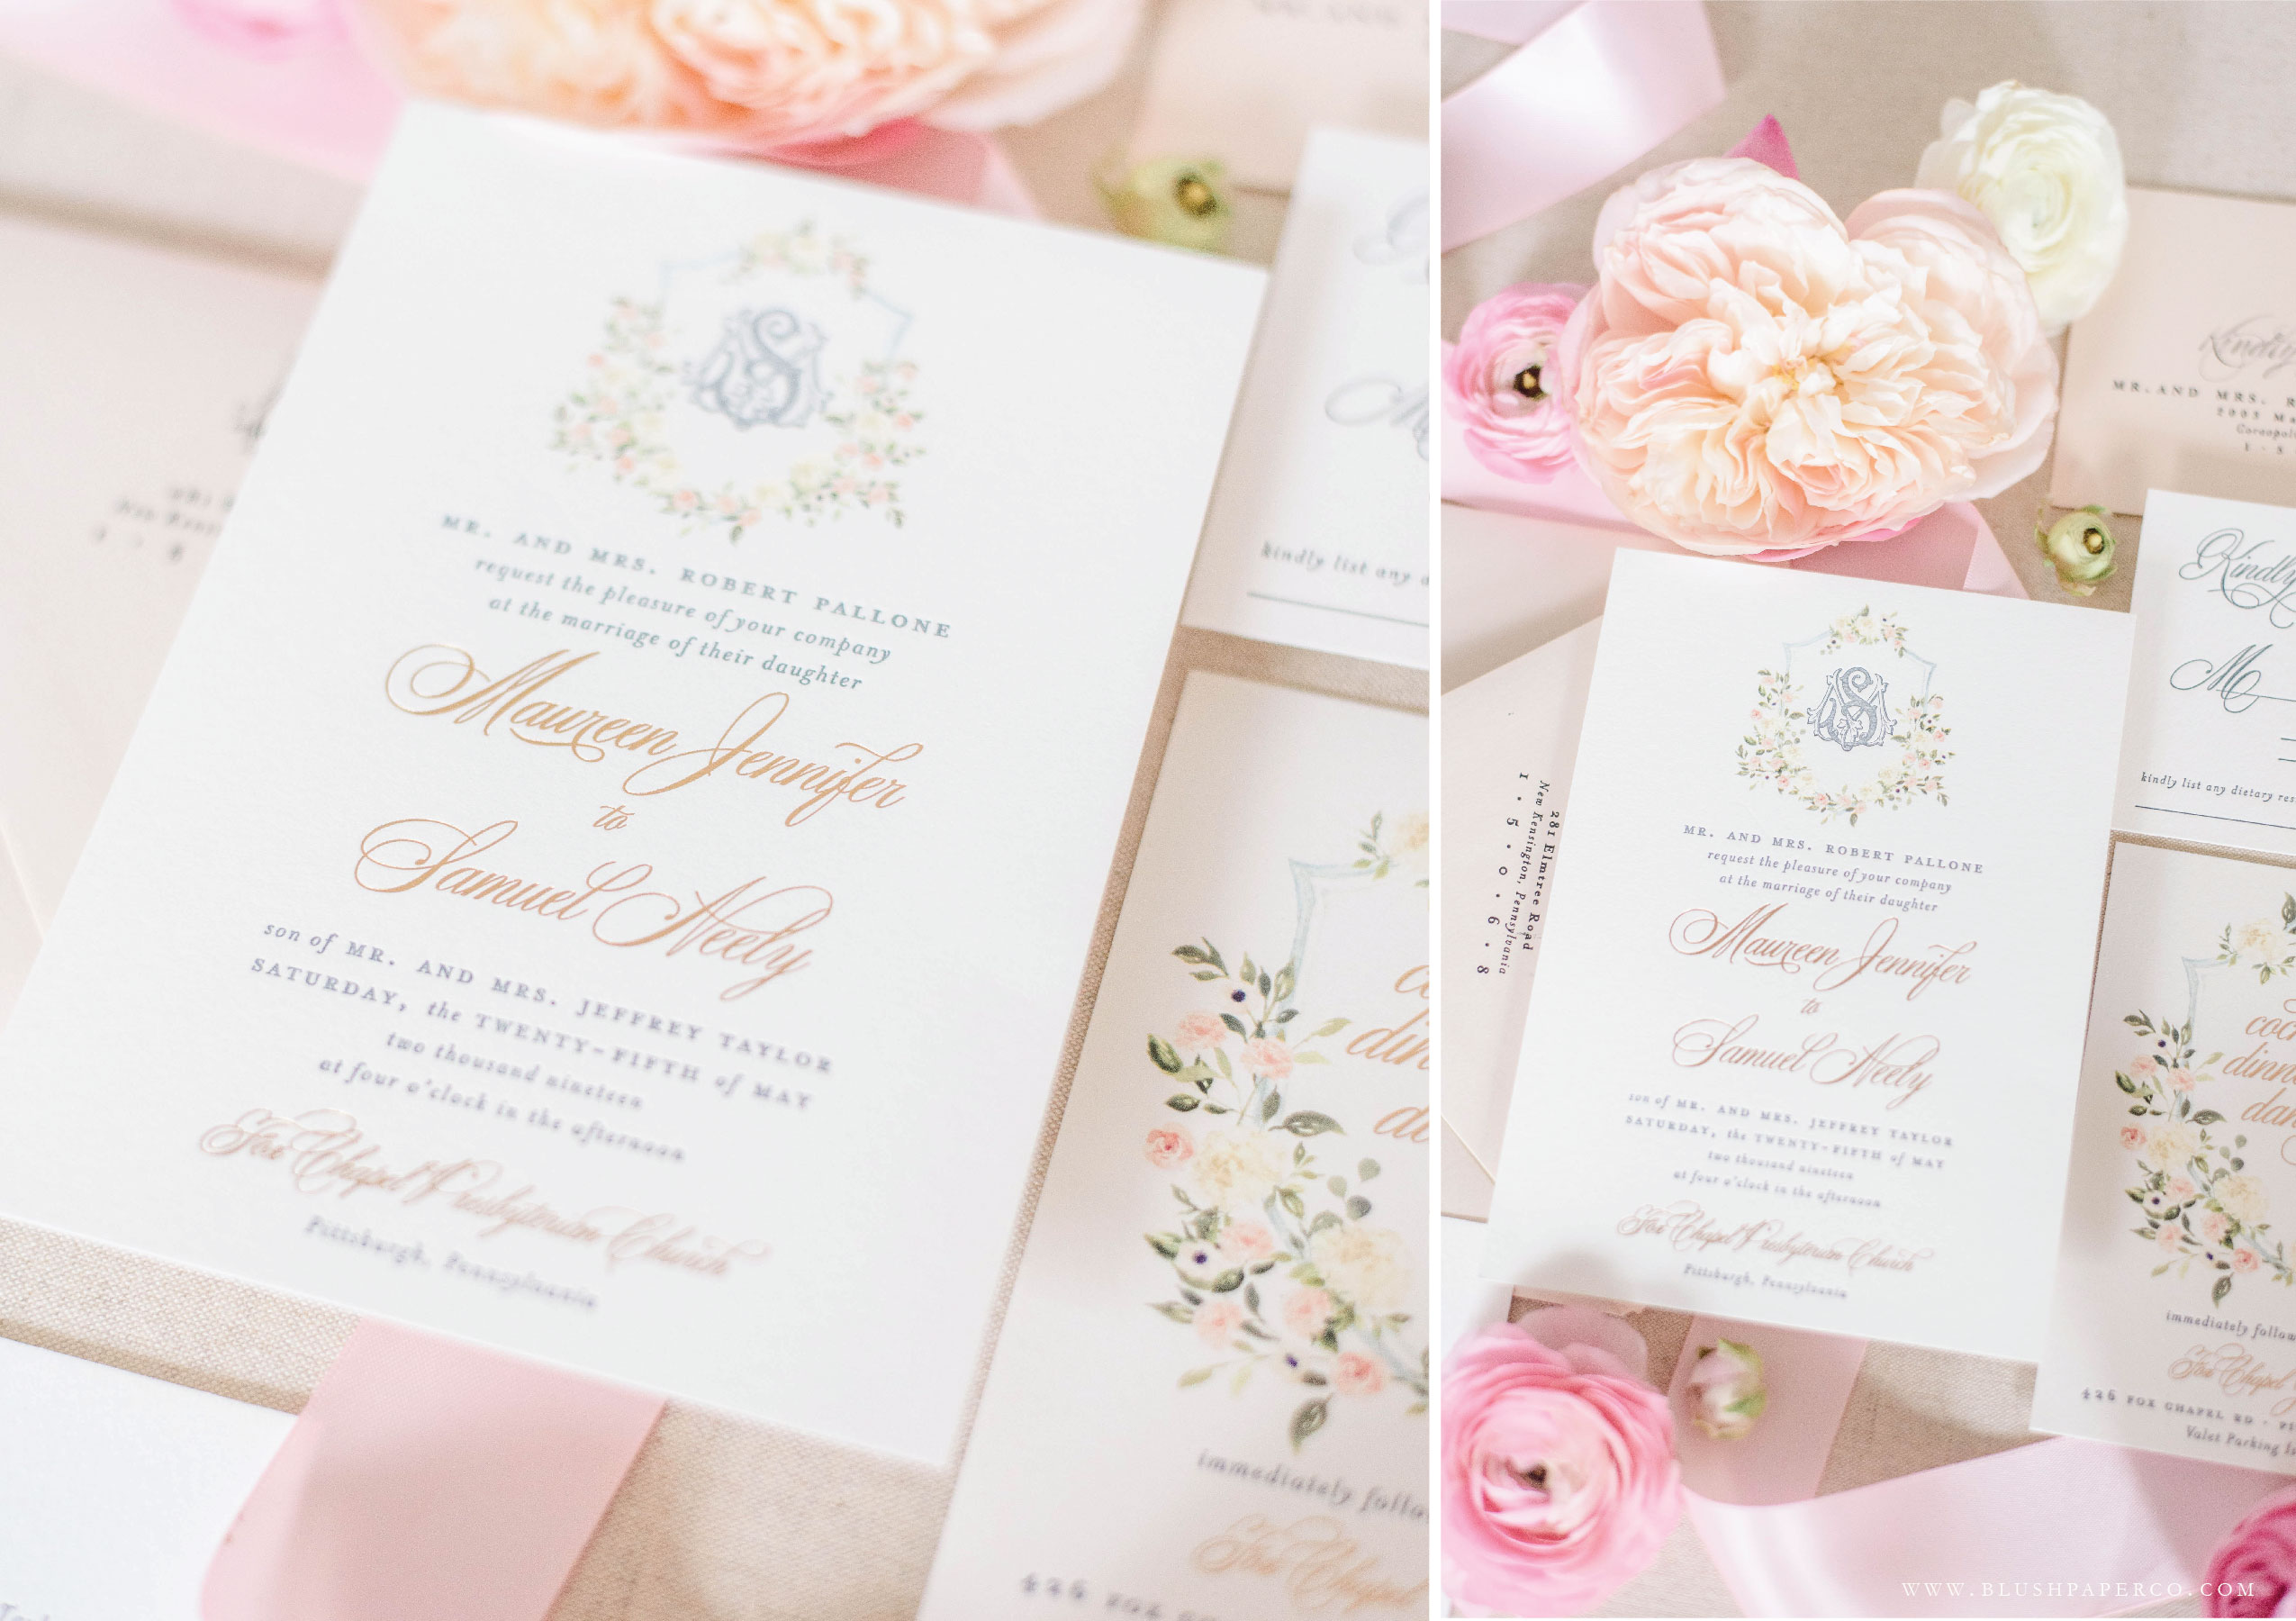 wedding monograms by blush paper co.